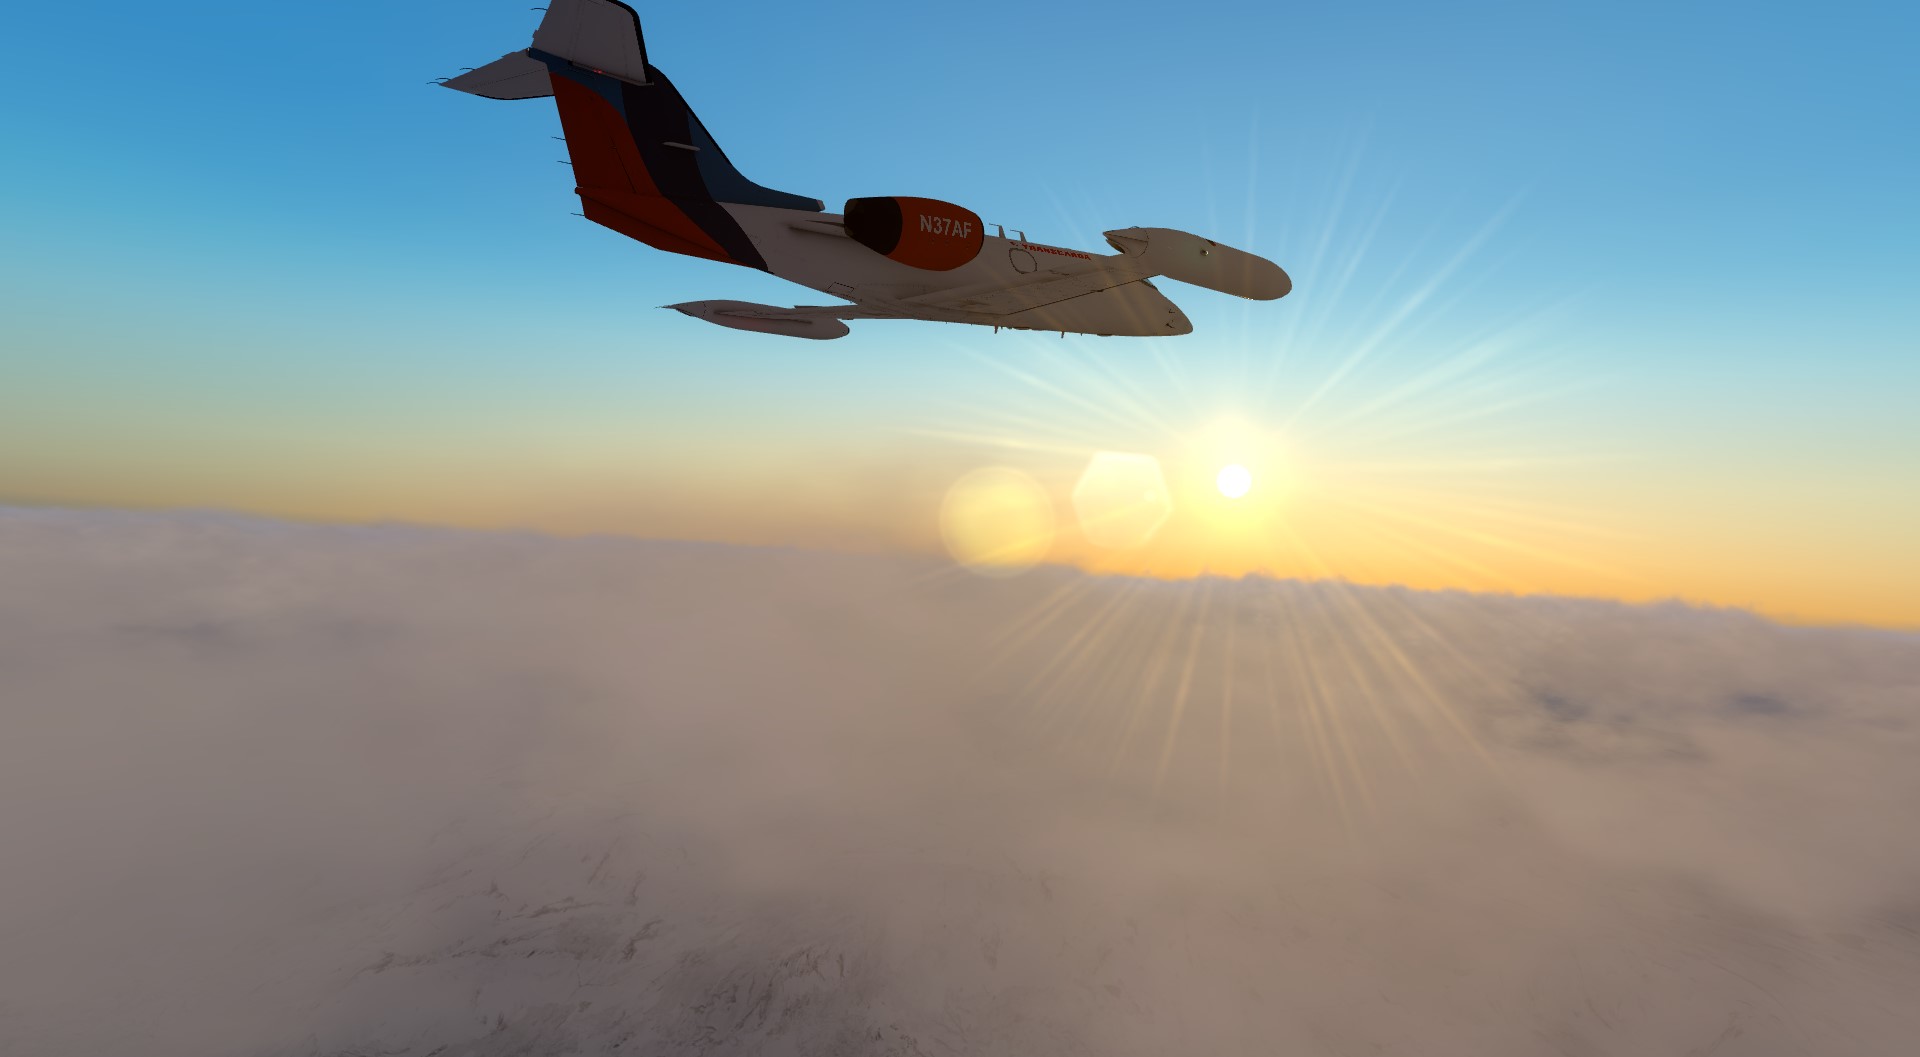 Flysimware – Learjet 35A 评测与冰岛送货之旅-5105 